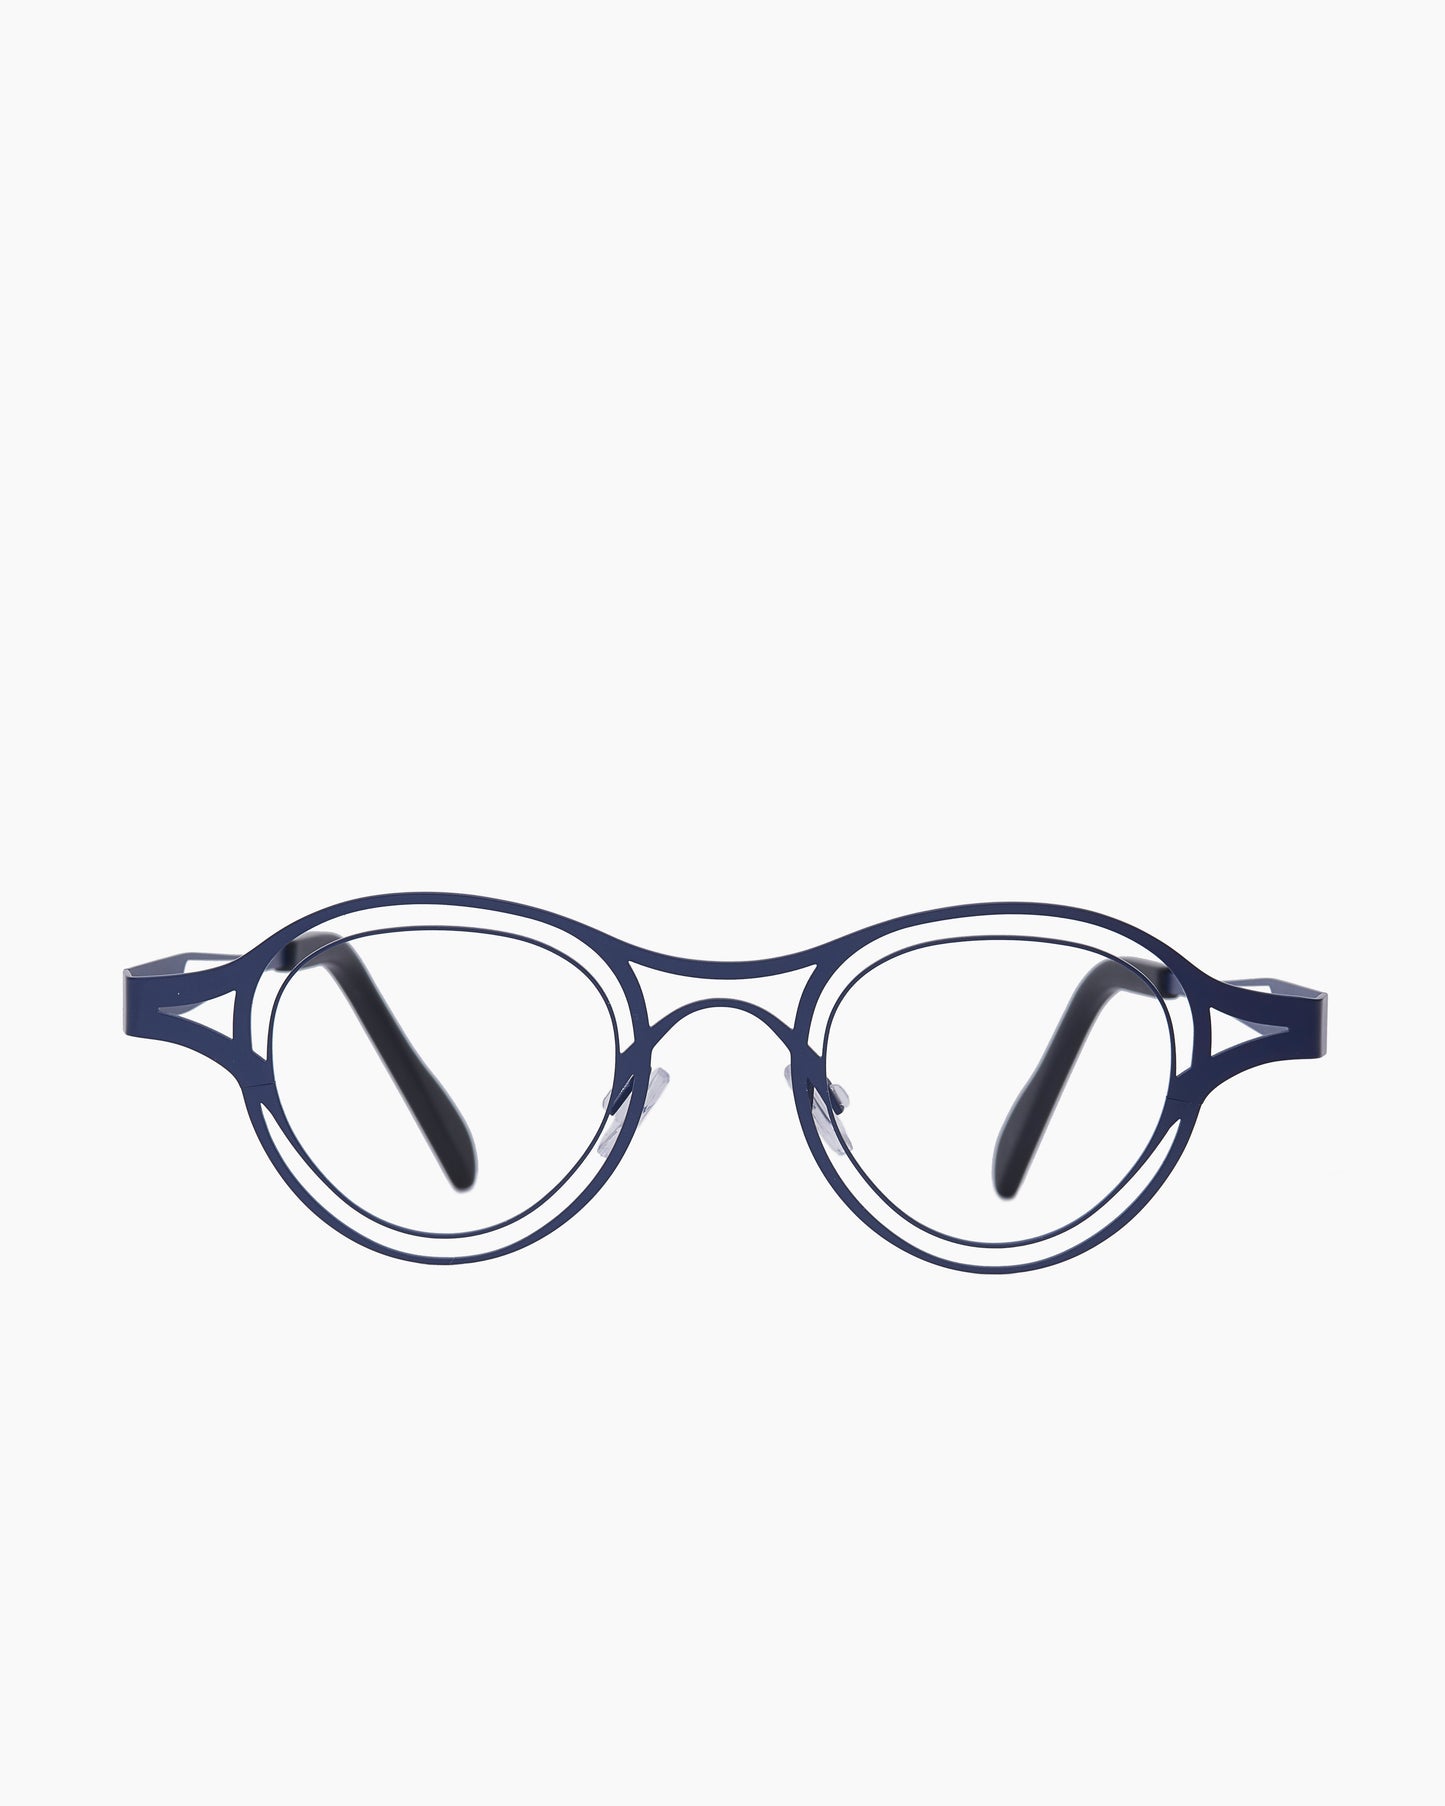 Theo - Tarifa - 353 | glasses bar